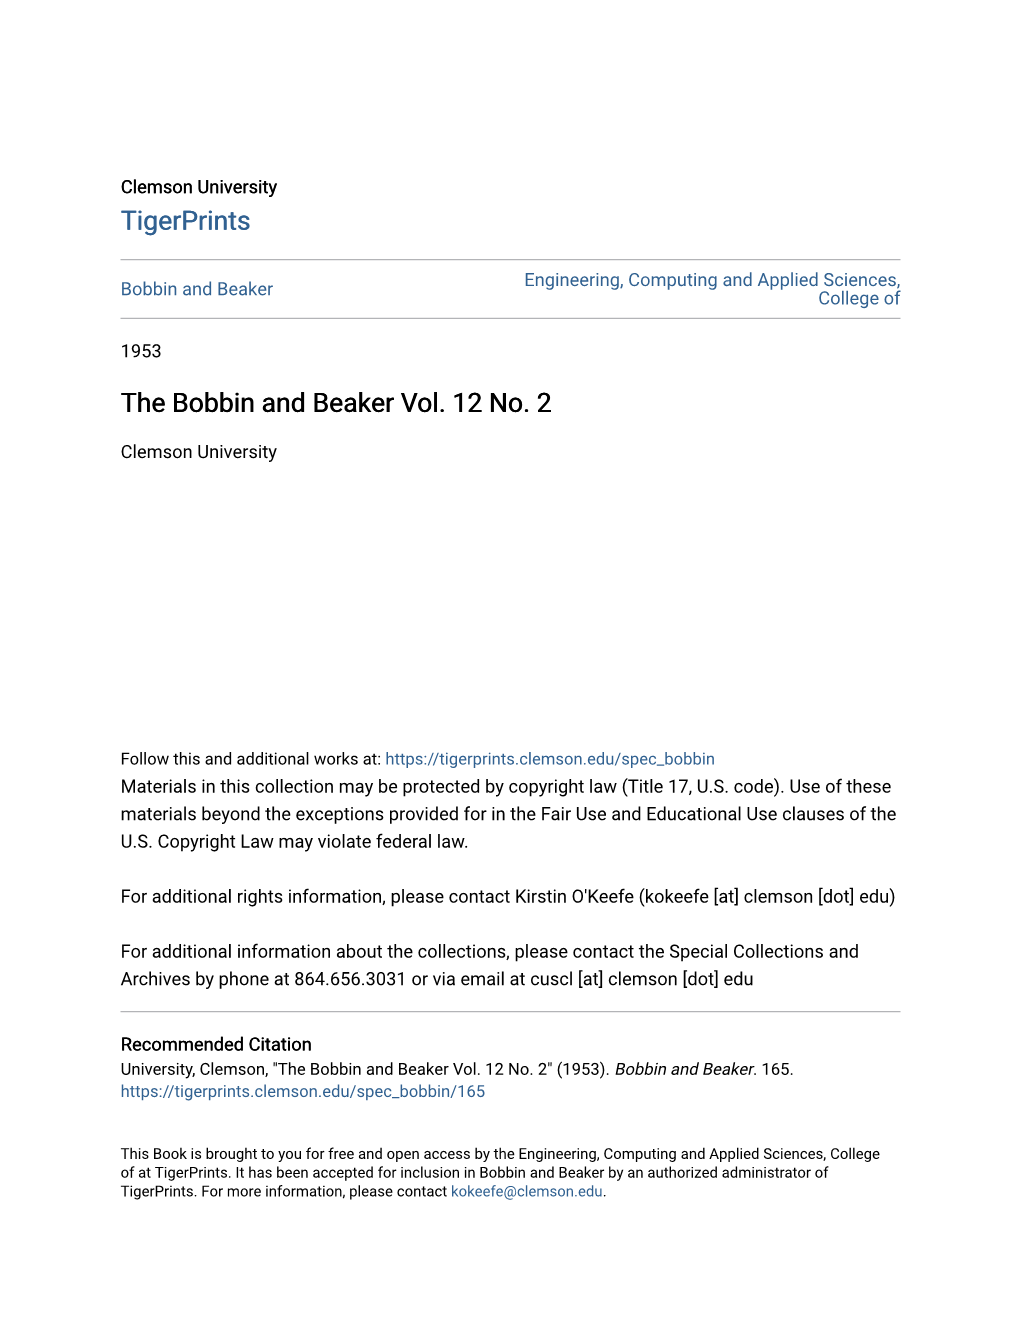 The Bobbin and Beaker Vol. 12 No. 2